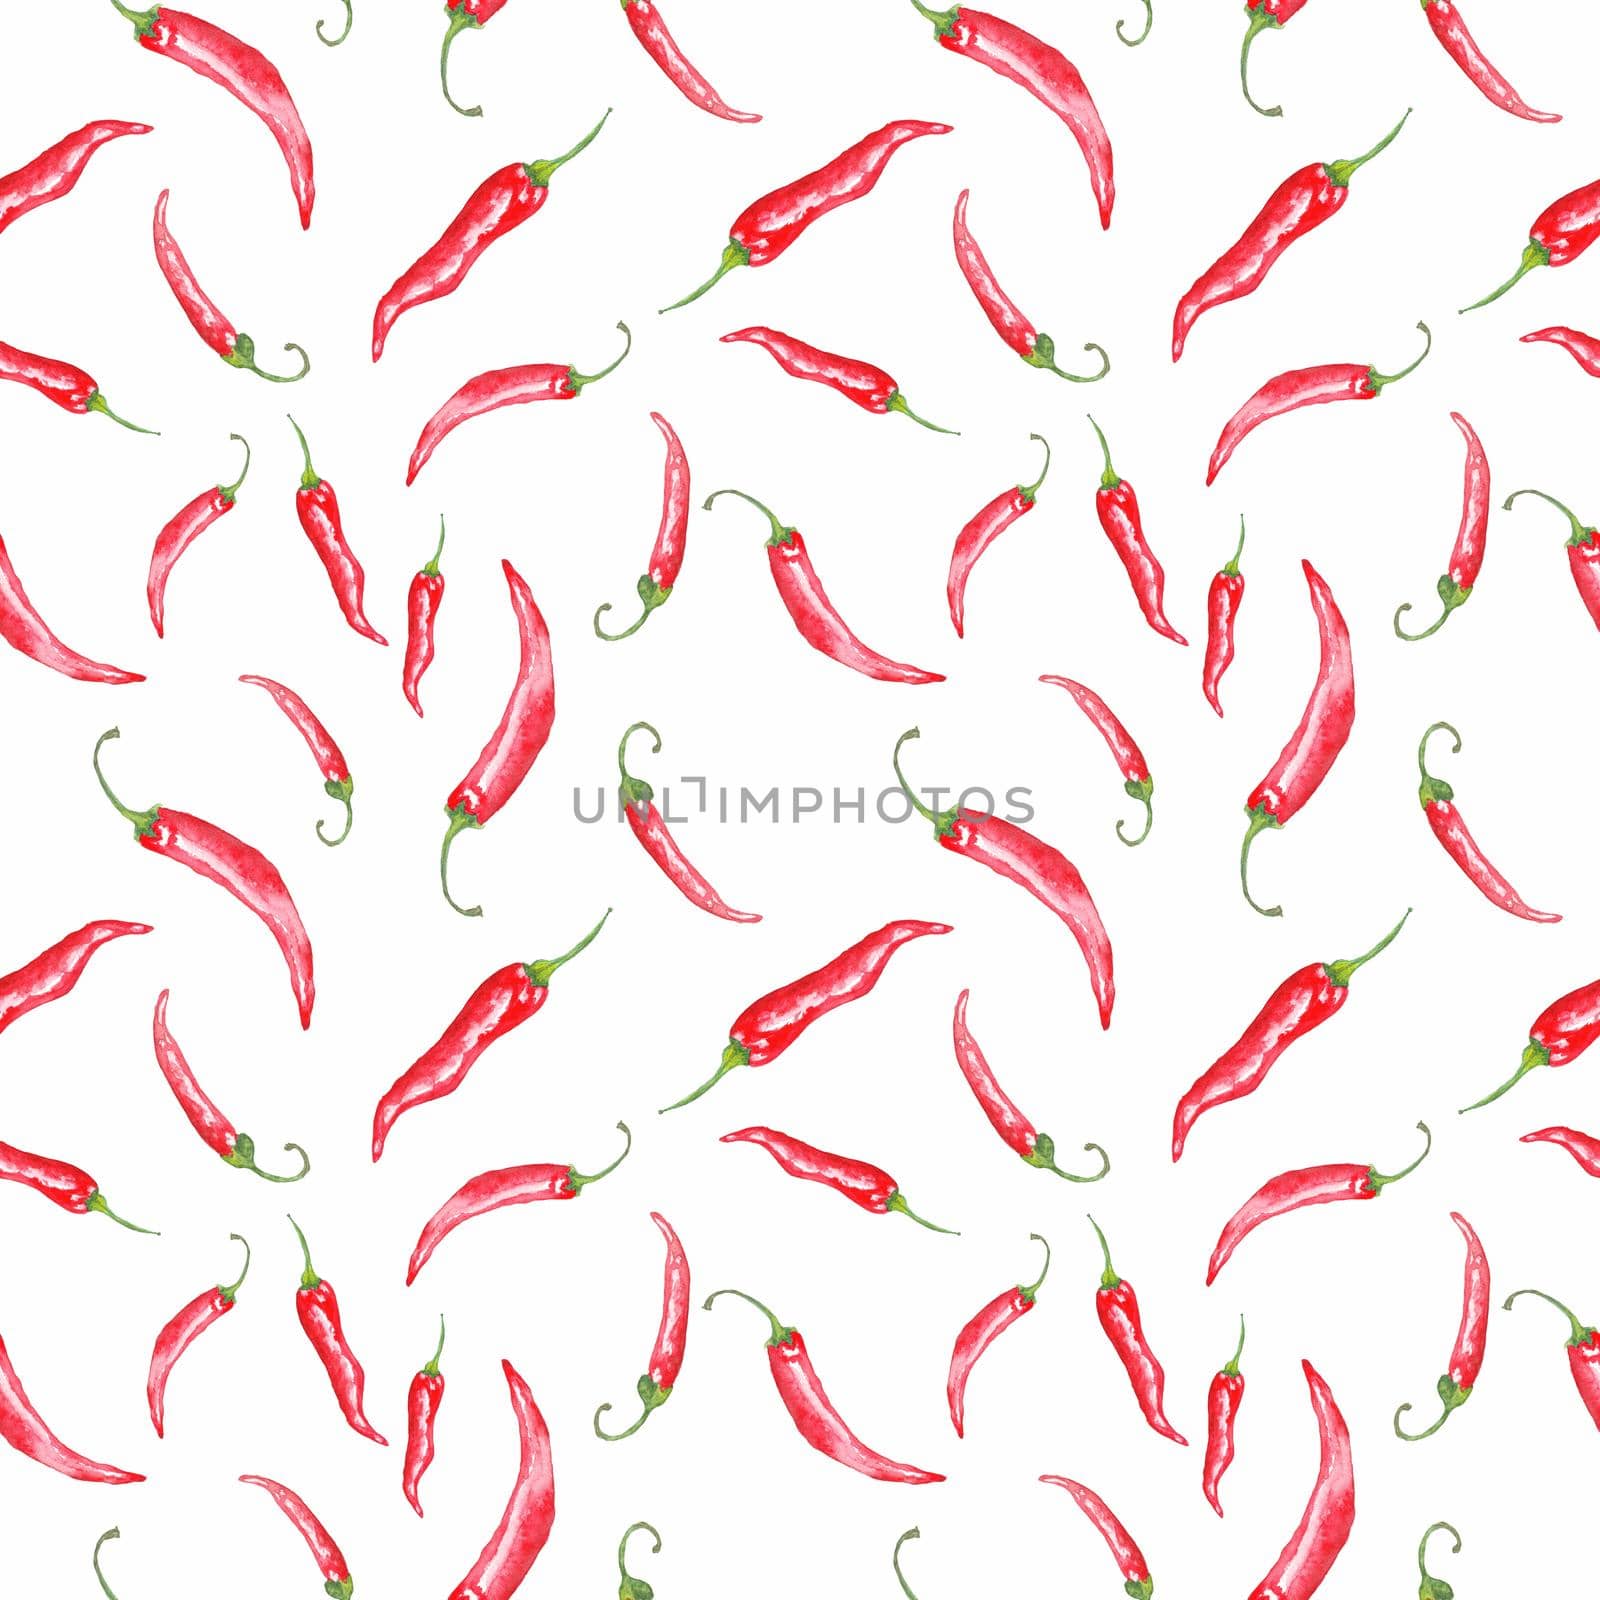 Seamless kitchen spicy background for textile design